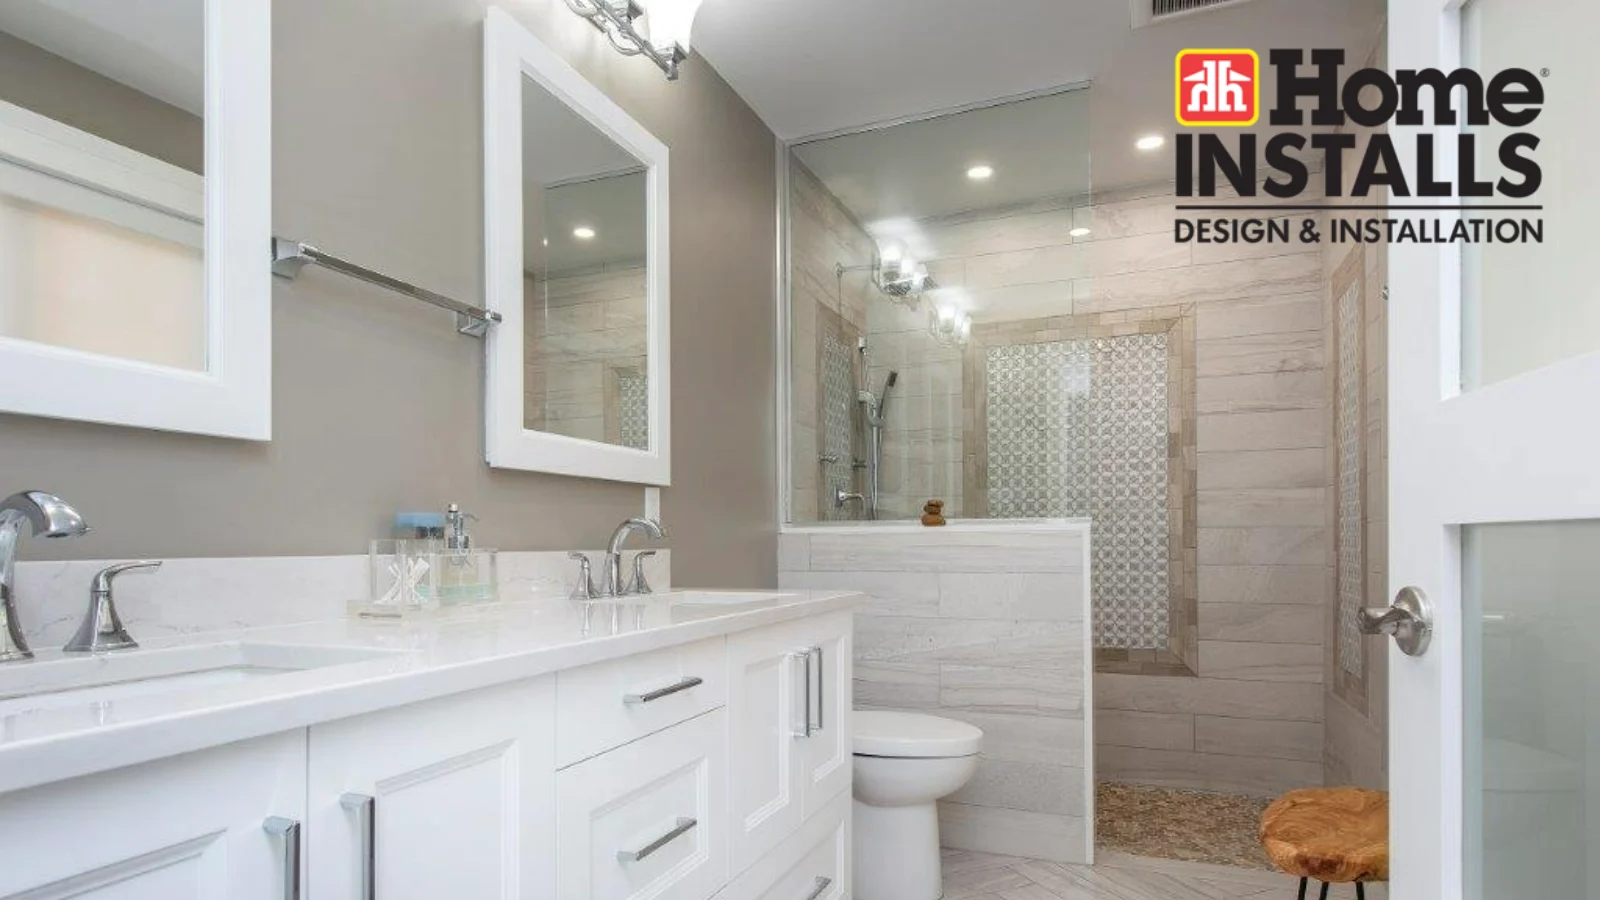 Home Installs - Bathroom Installs - Designer Tips - Header Image